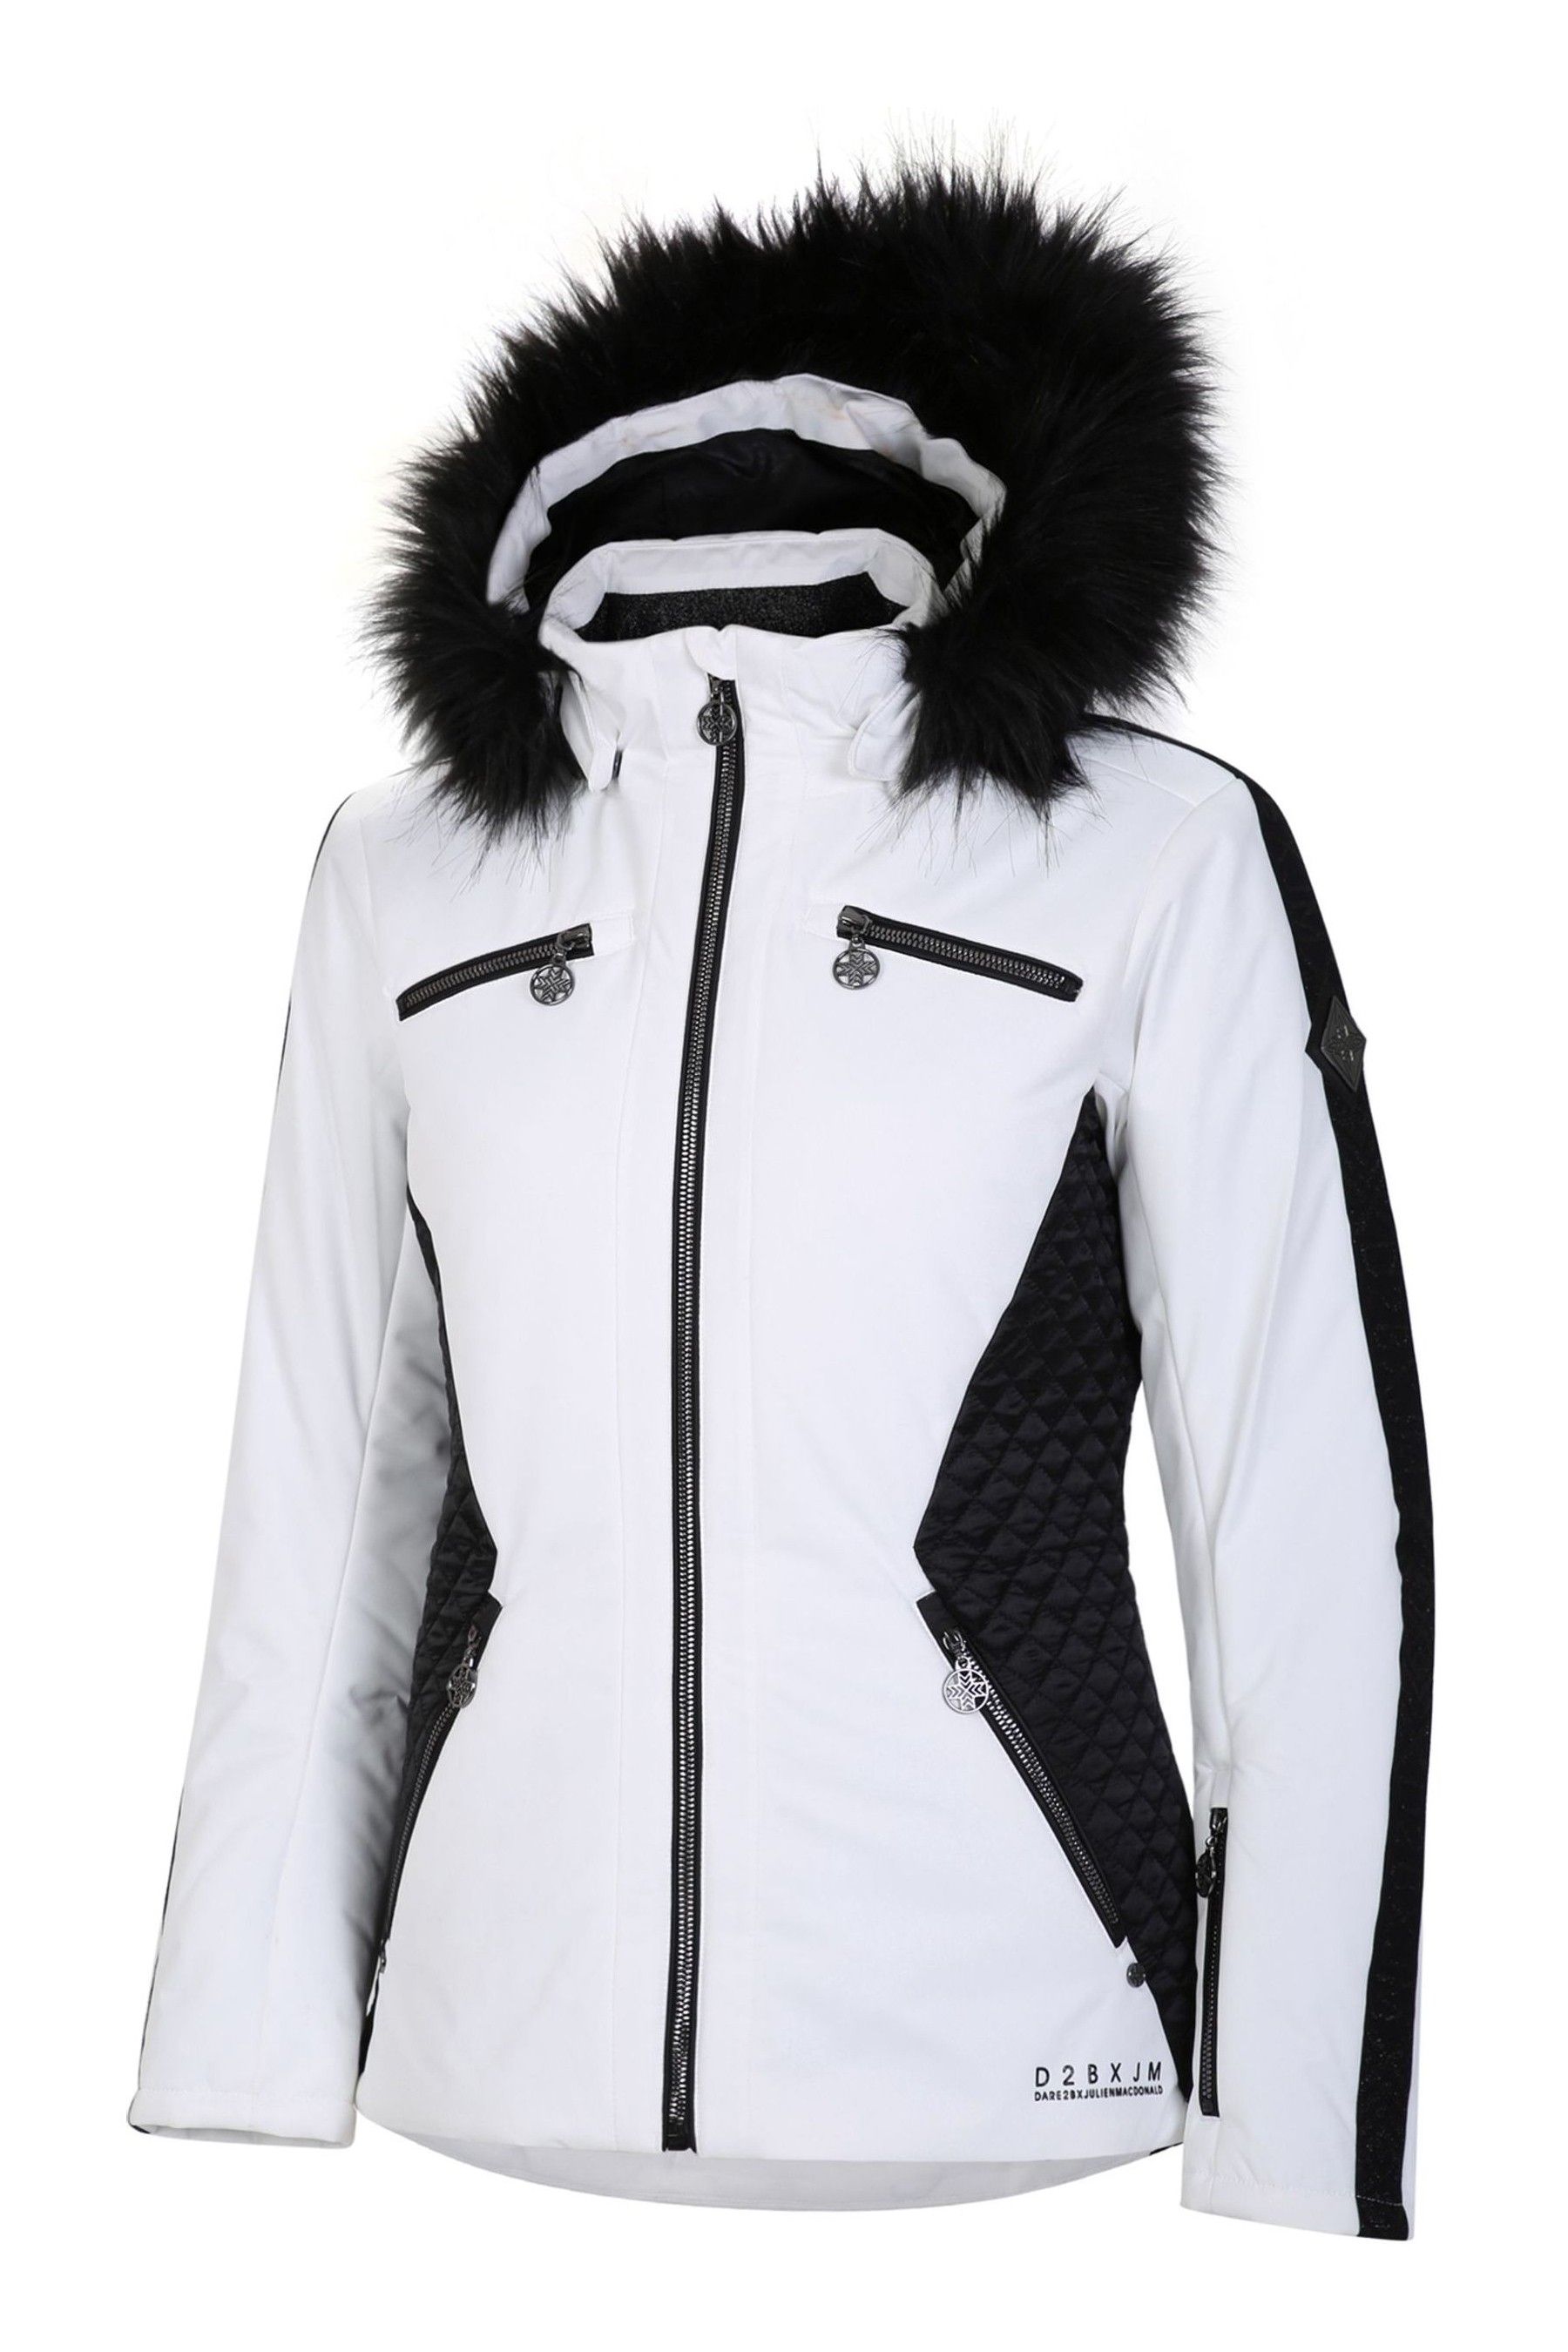 Buy Dare 2b Julien Macdonald White Mastery Waterproof Ski Jacket from ...